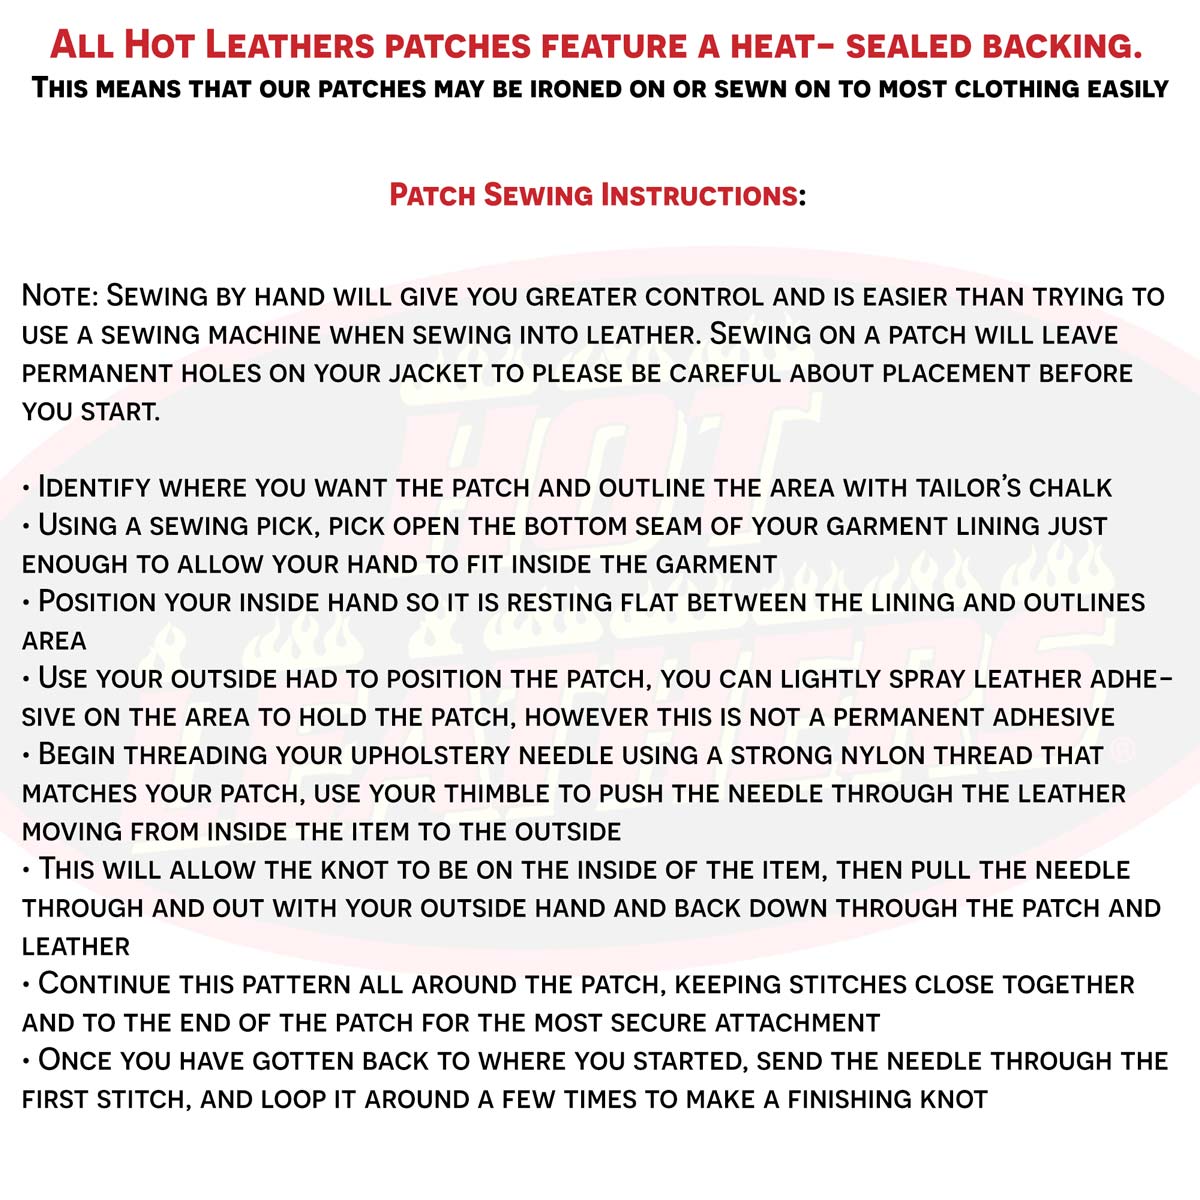 Hot Leathers Asshole 4” X 1” Top Rocker Patch PPM4182